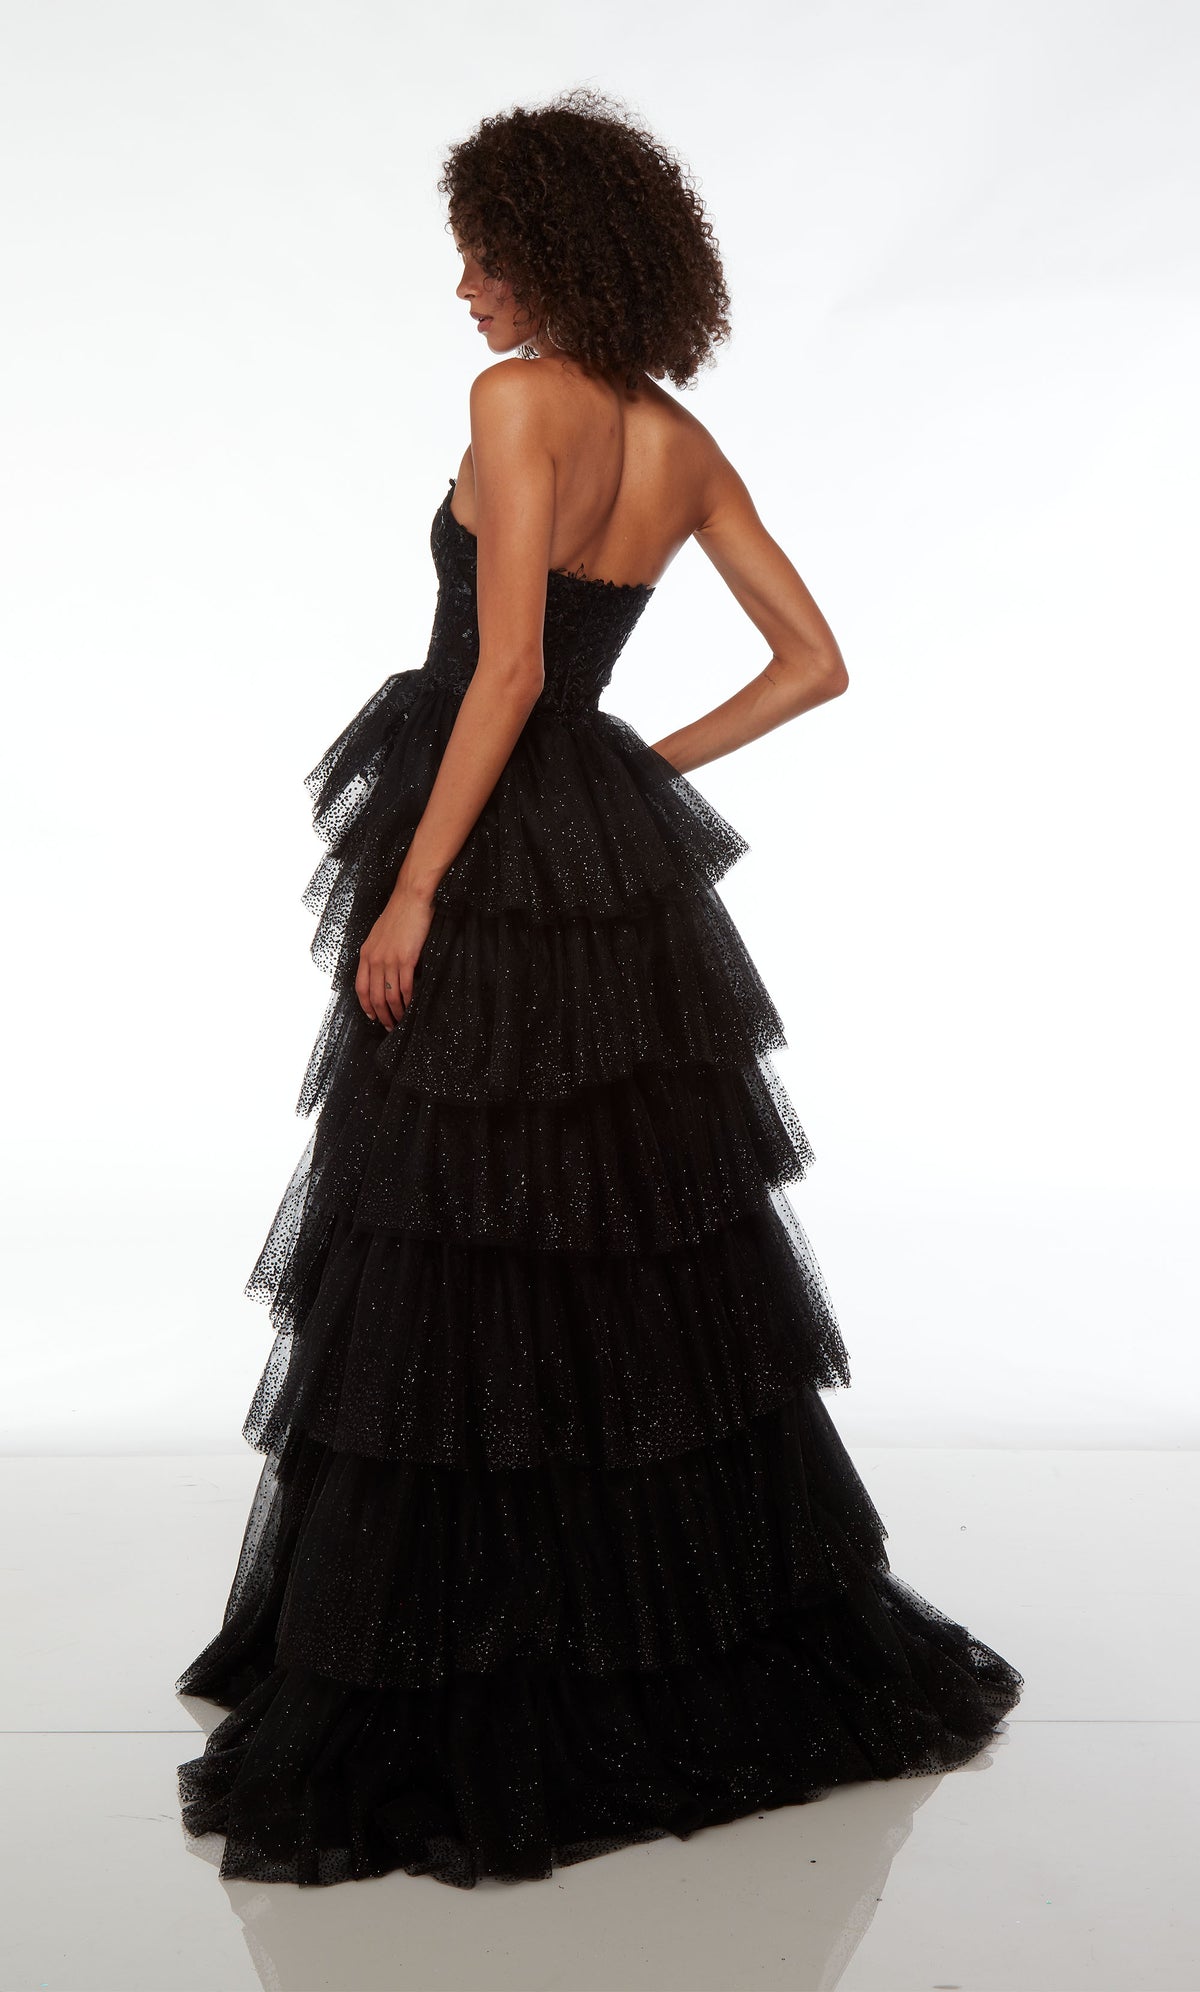 Chic black prom dress: strapless sweetheart neckline, high slit, zip-up back, slight train, and an glitter tulle ruffled skirt for an stunning look.